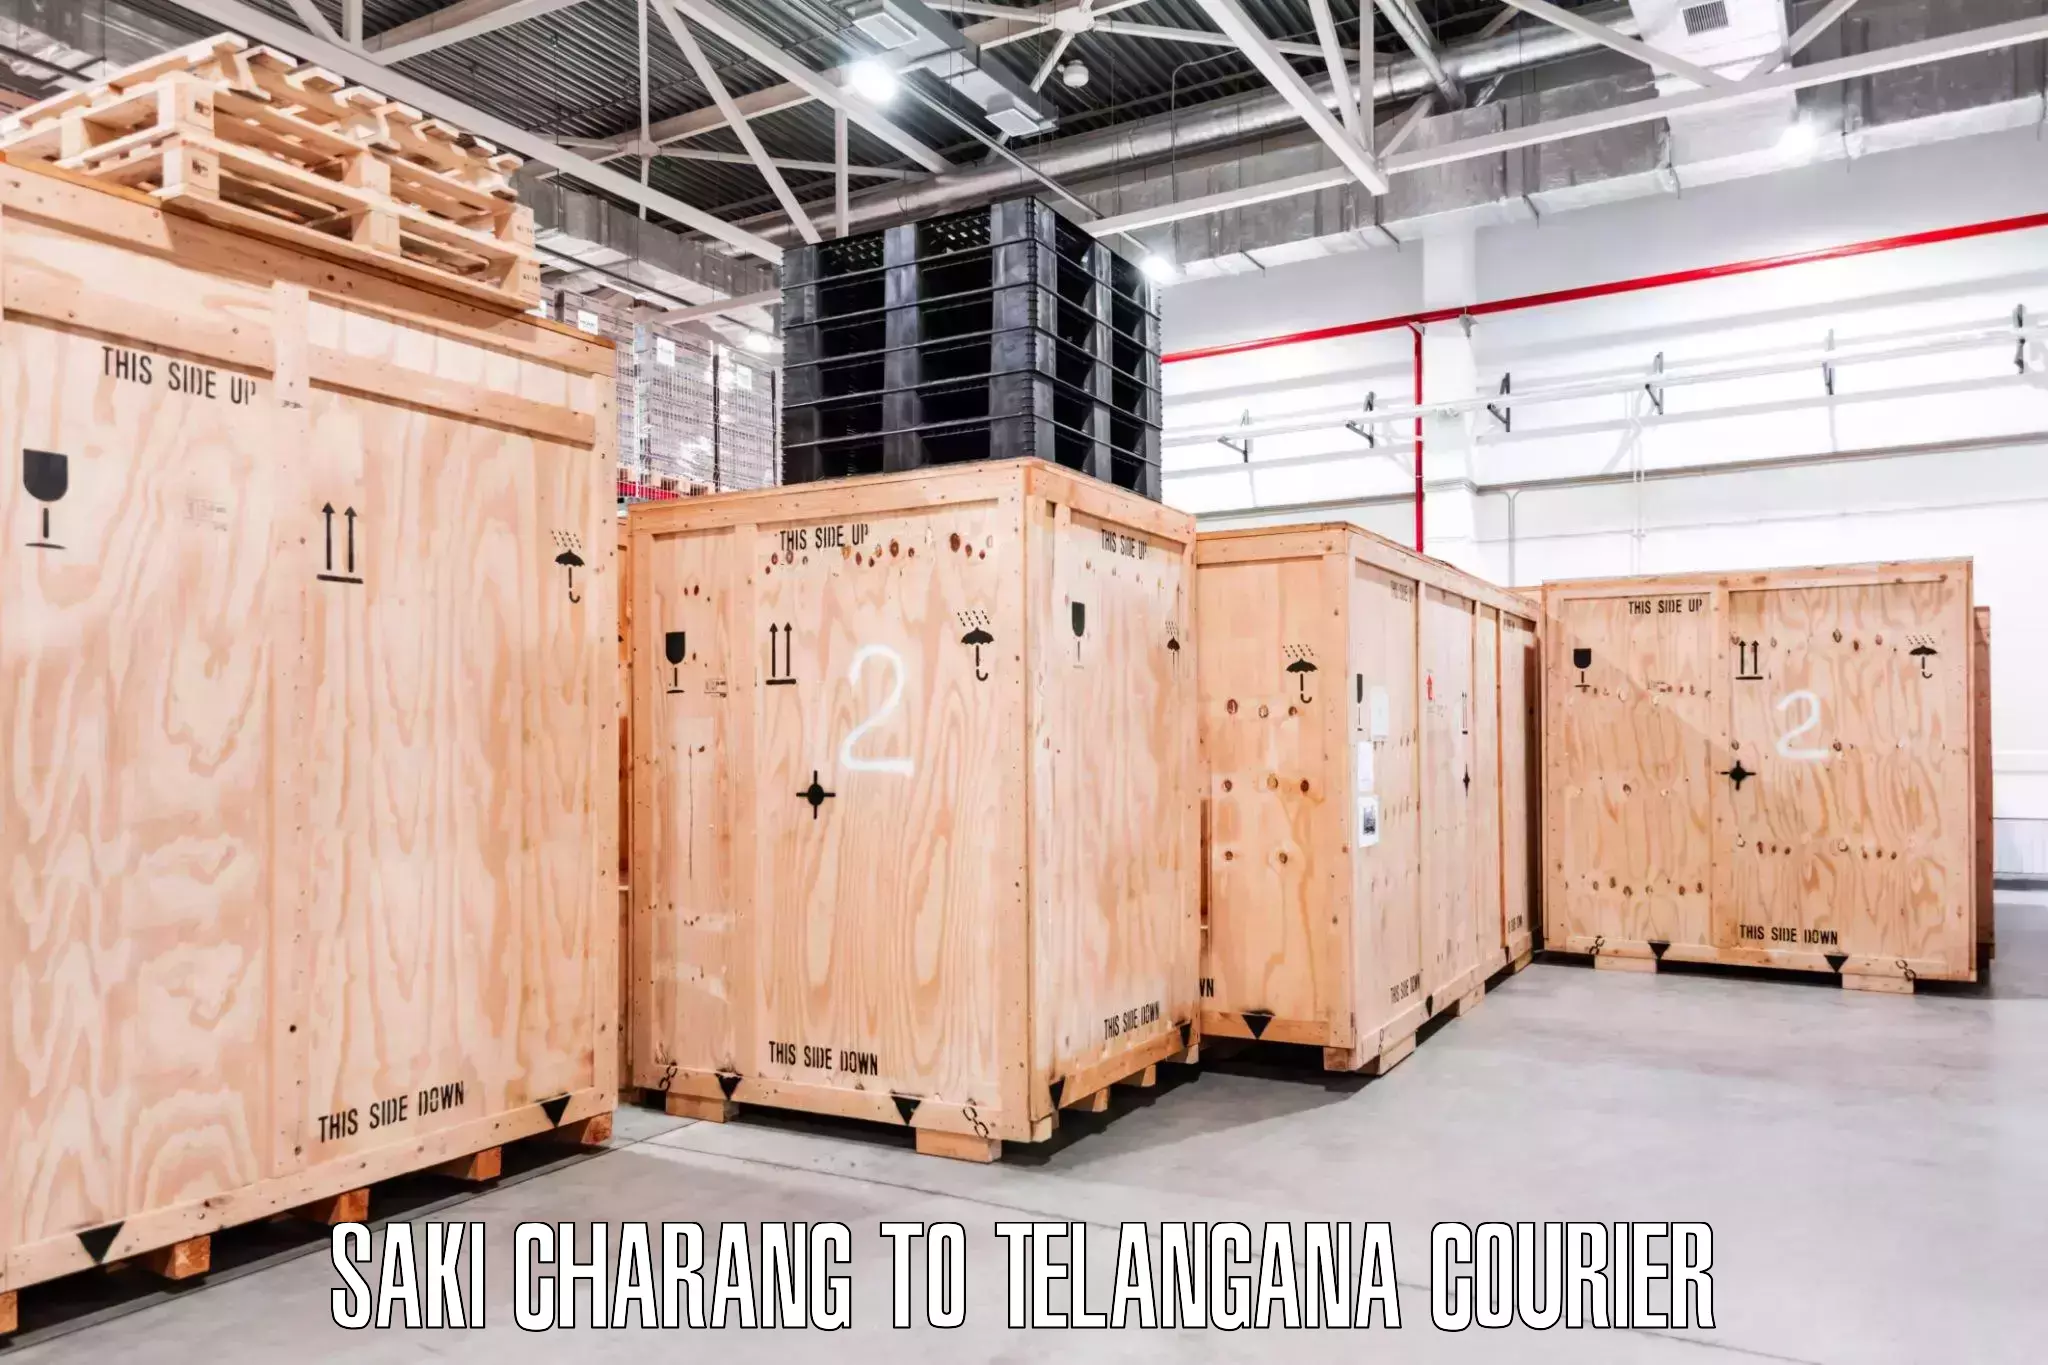 Professional moving company Saki Charang to Alair